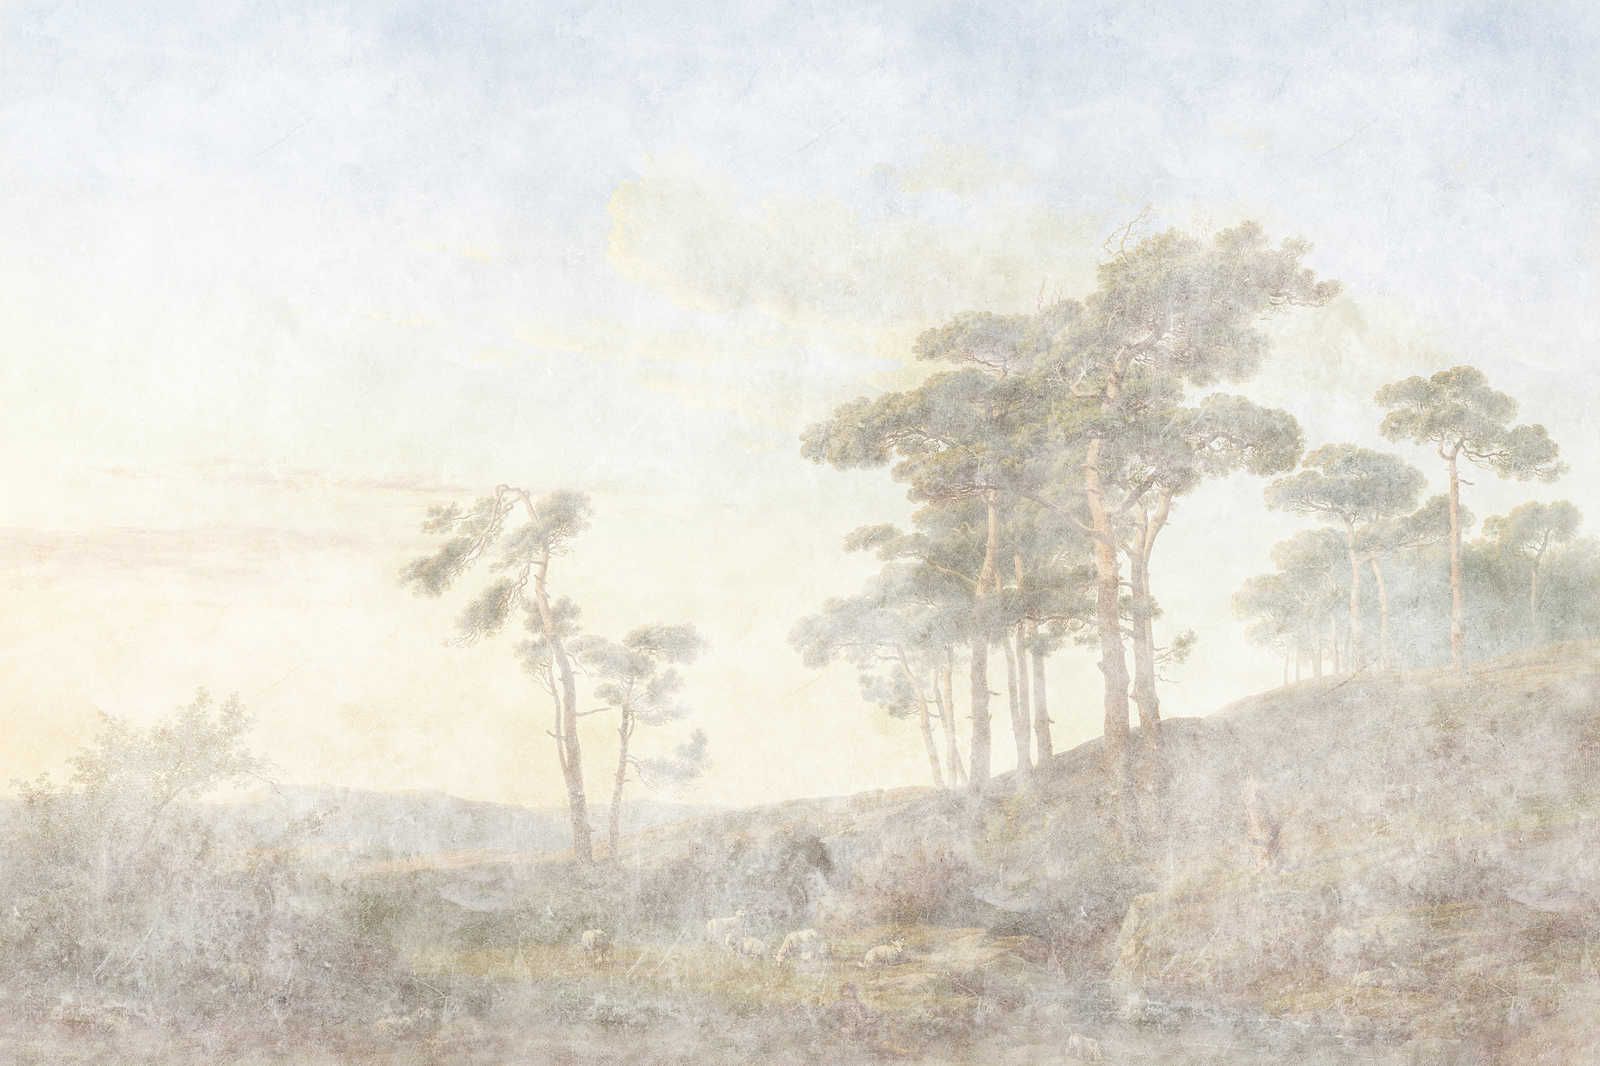             Romantic Grove 1 - Gemälde Leinwandbild verblasster Used Look – 0,90 m x 0,60 m
        